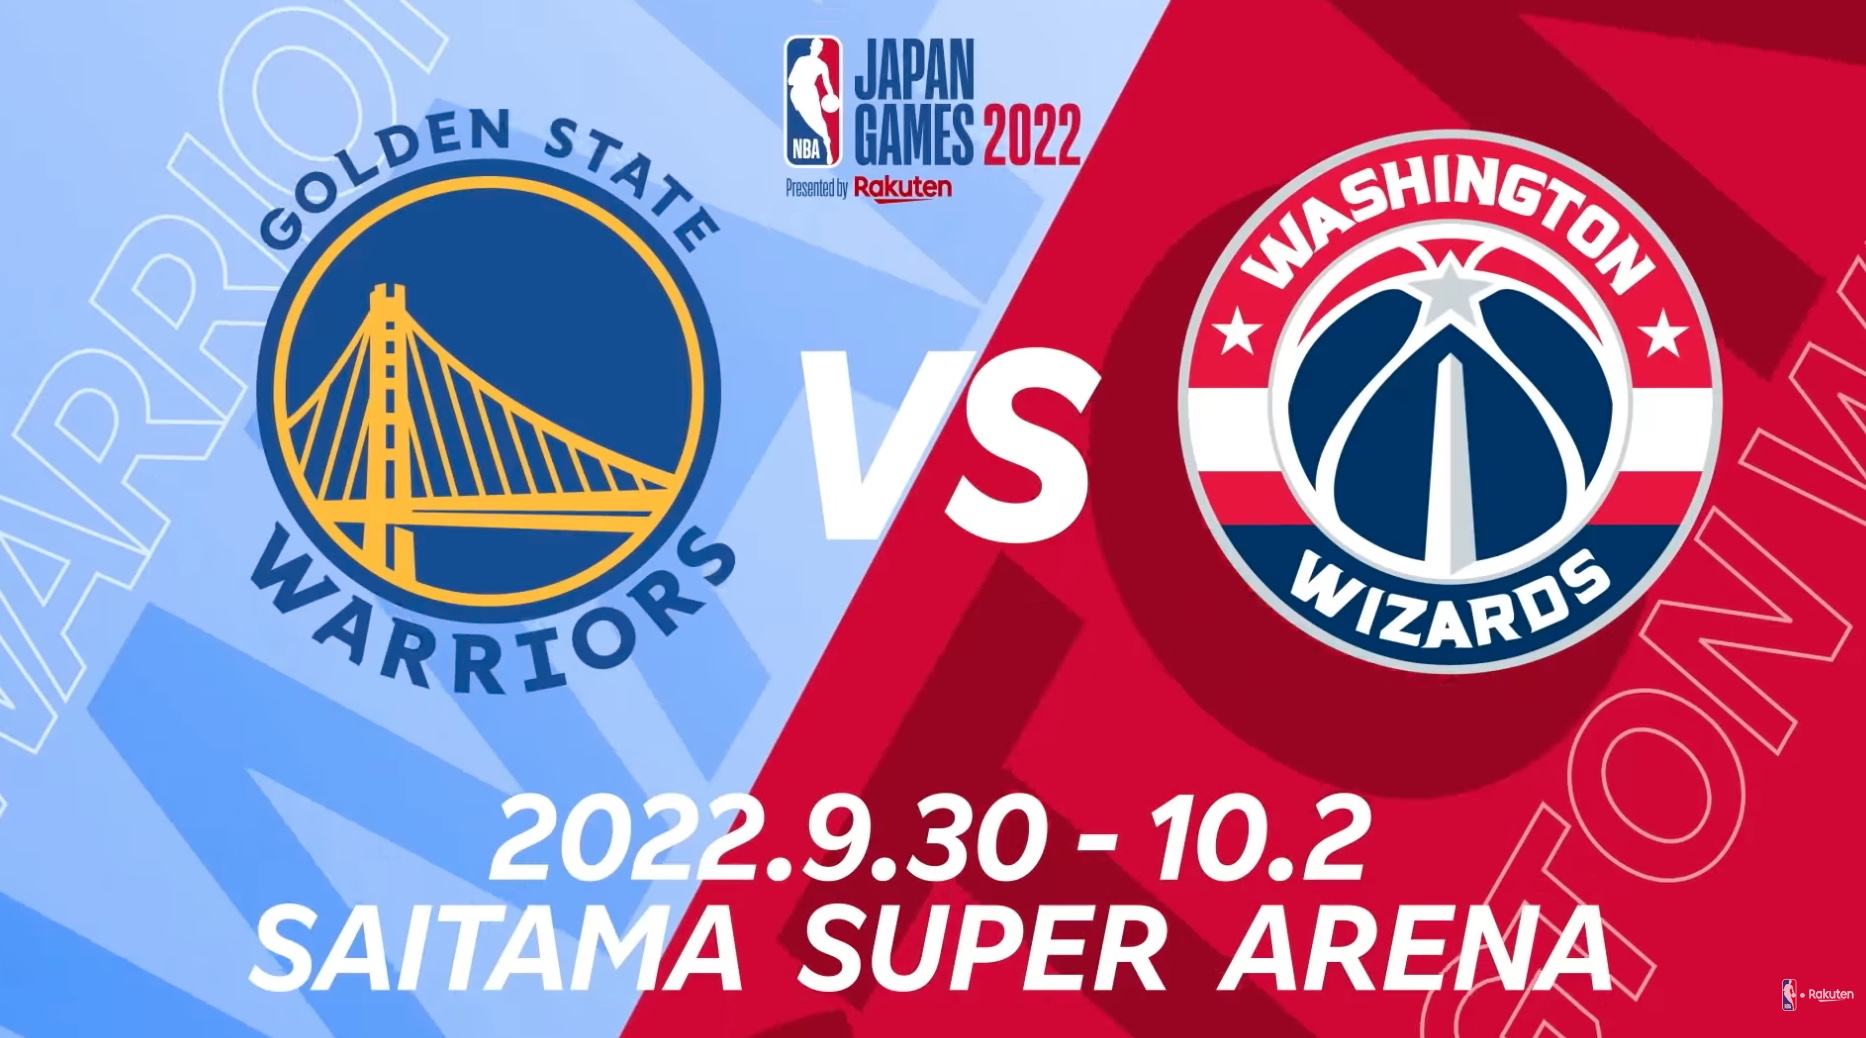 NBAジャパンゲーム2022　放送予定